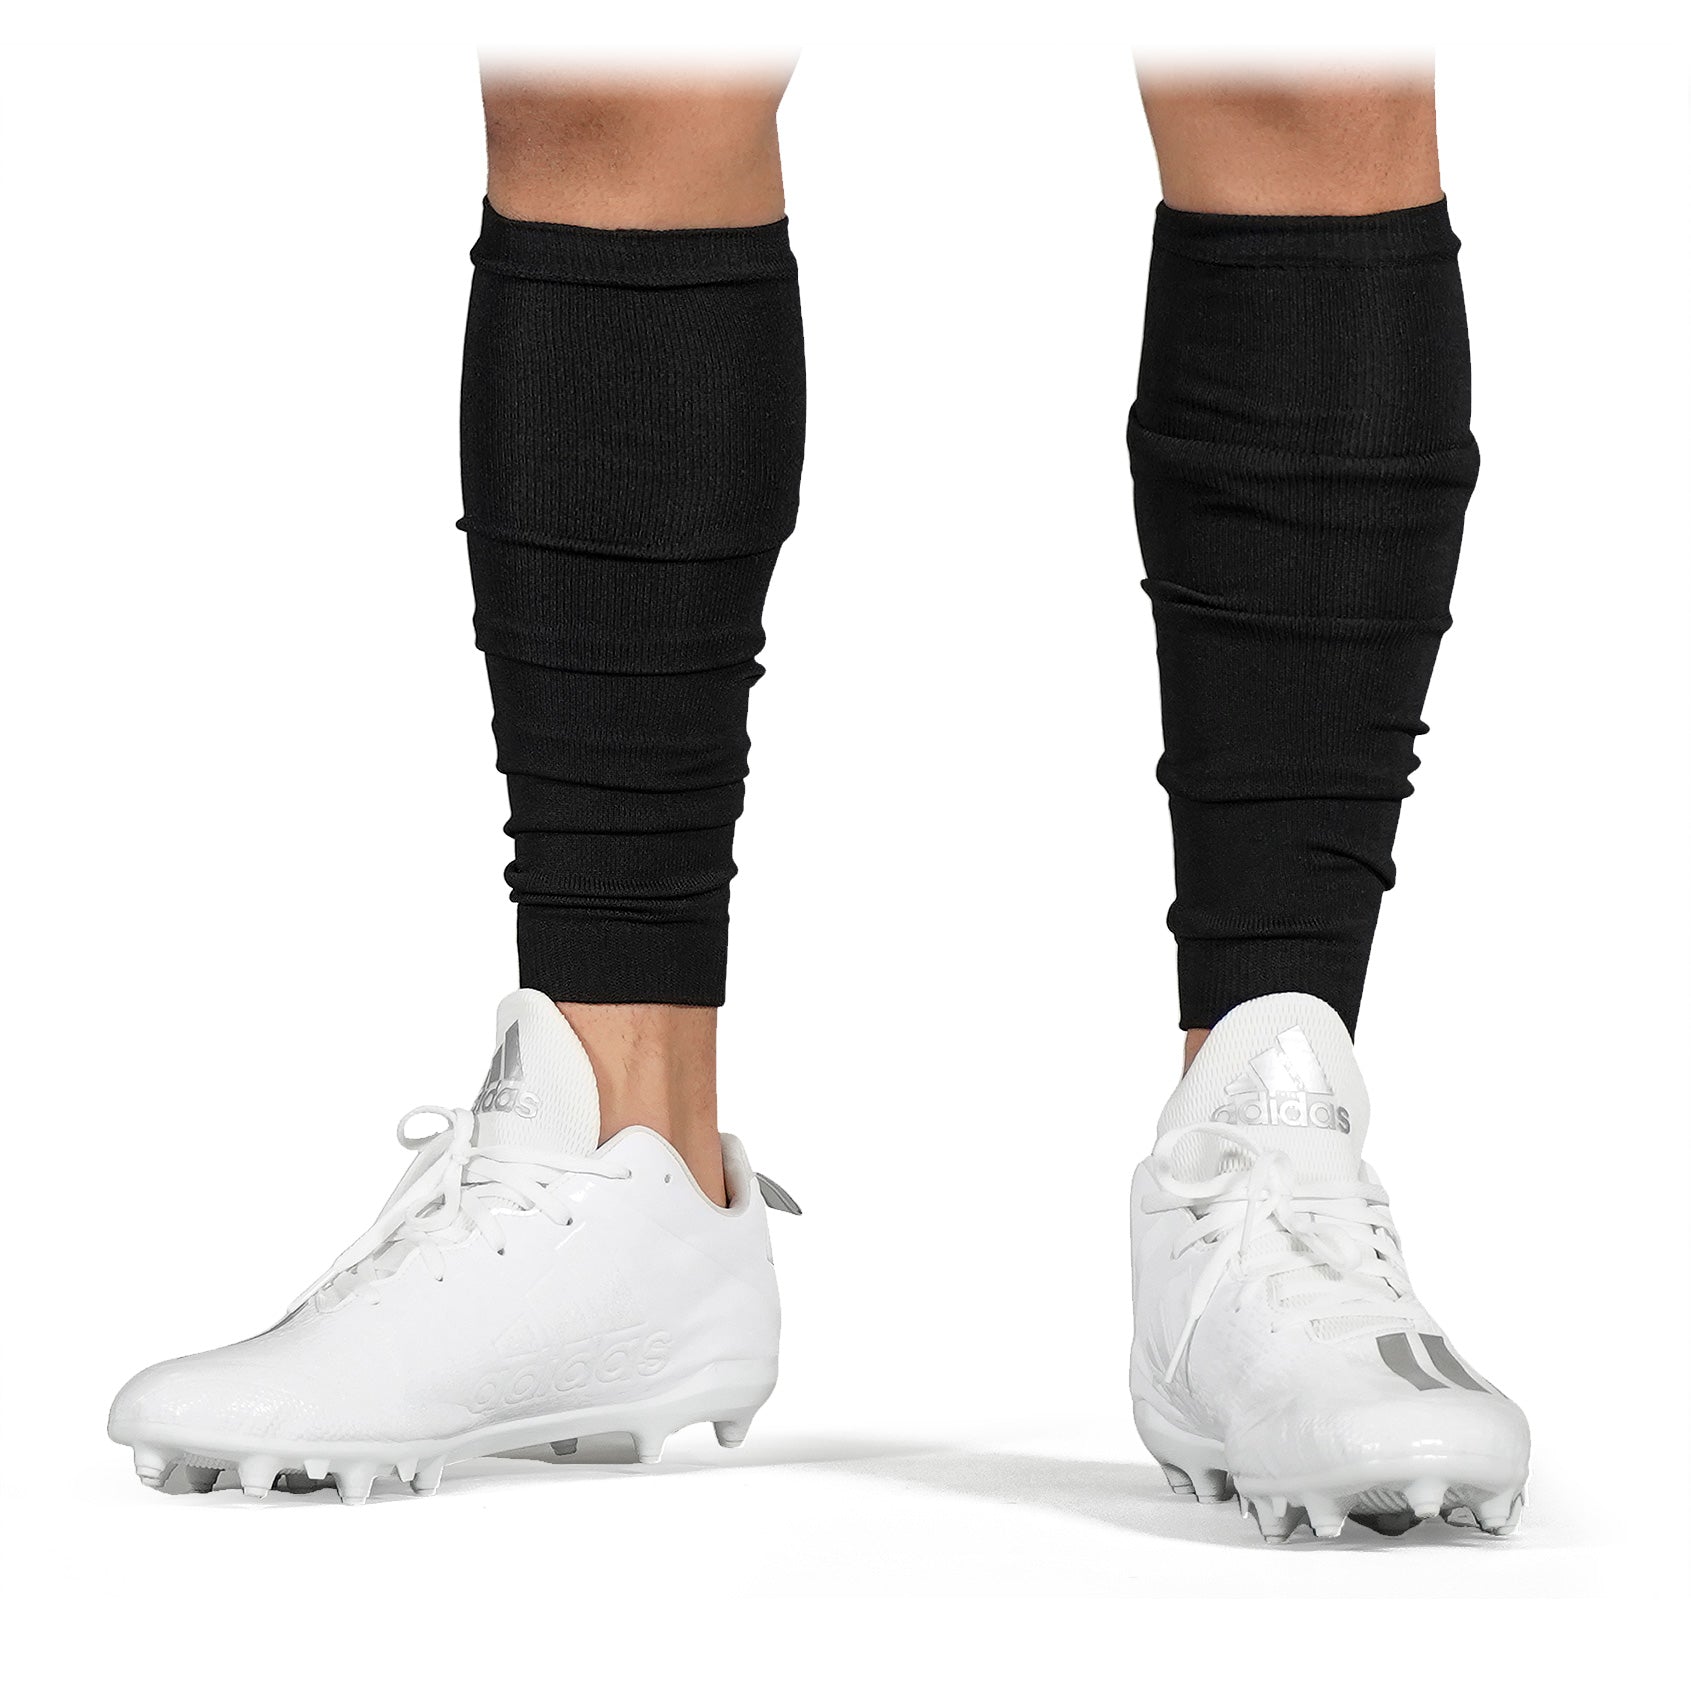  SLEEFS Calf Compression Leg Sleeves - Football Leg Sleeves  For Adult Athletes - Shin Splint Support